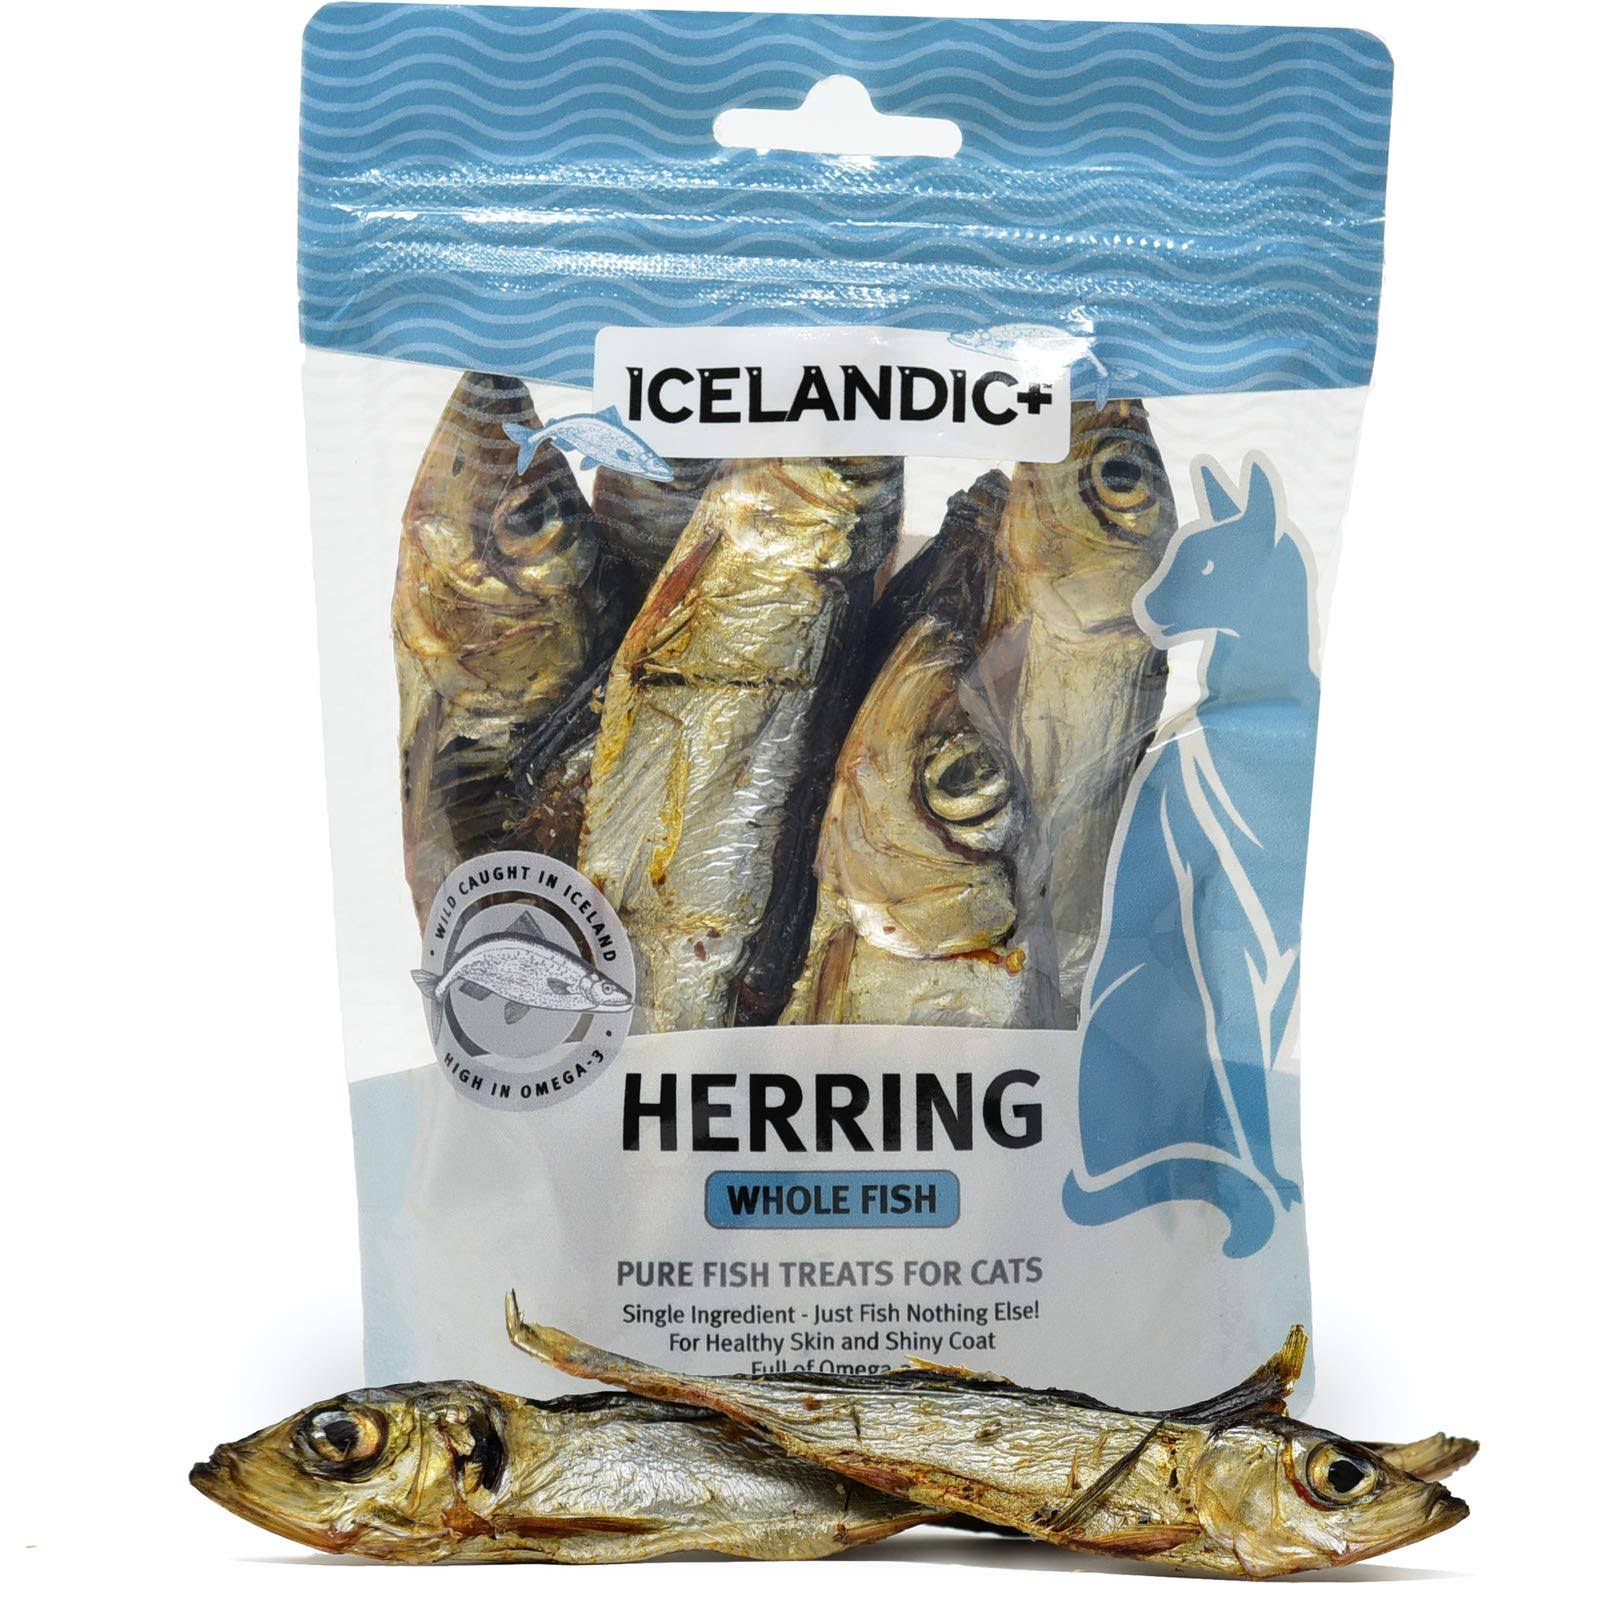 Icelandic+ Herring Whole Fish Cat Treats - 1.5 oz